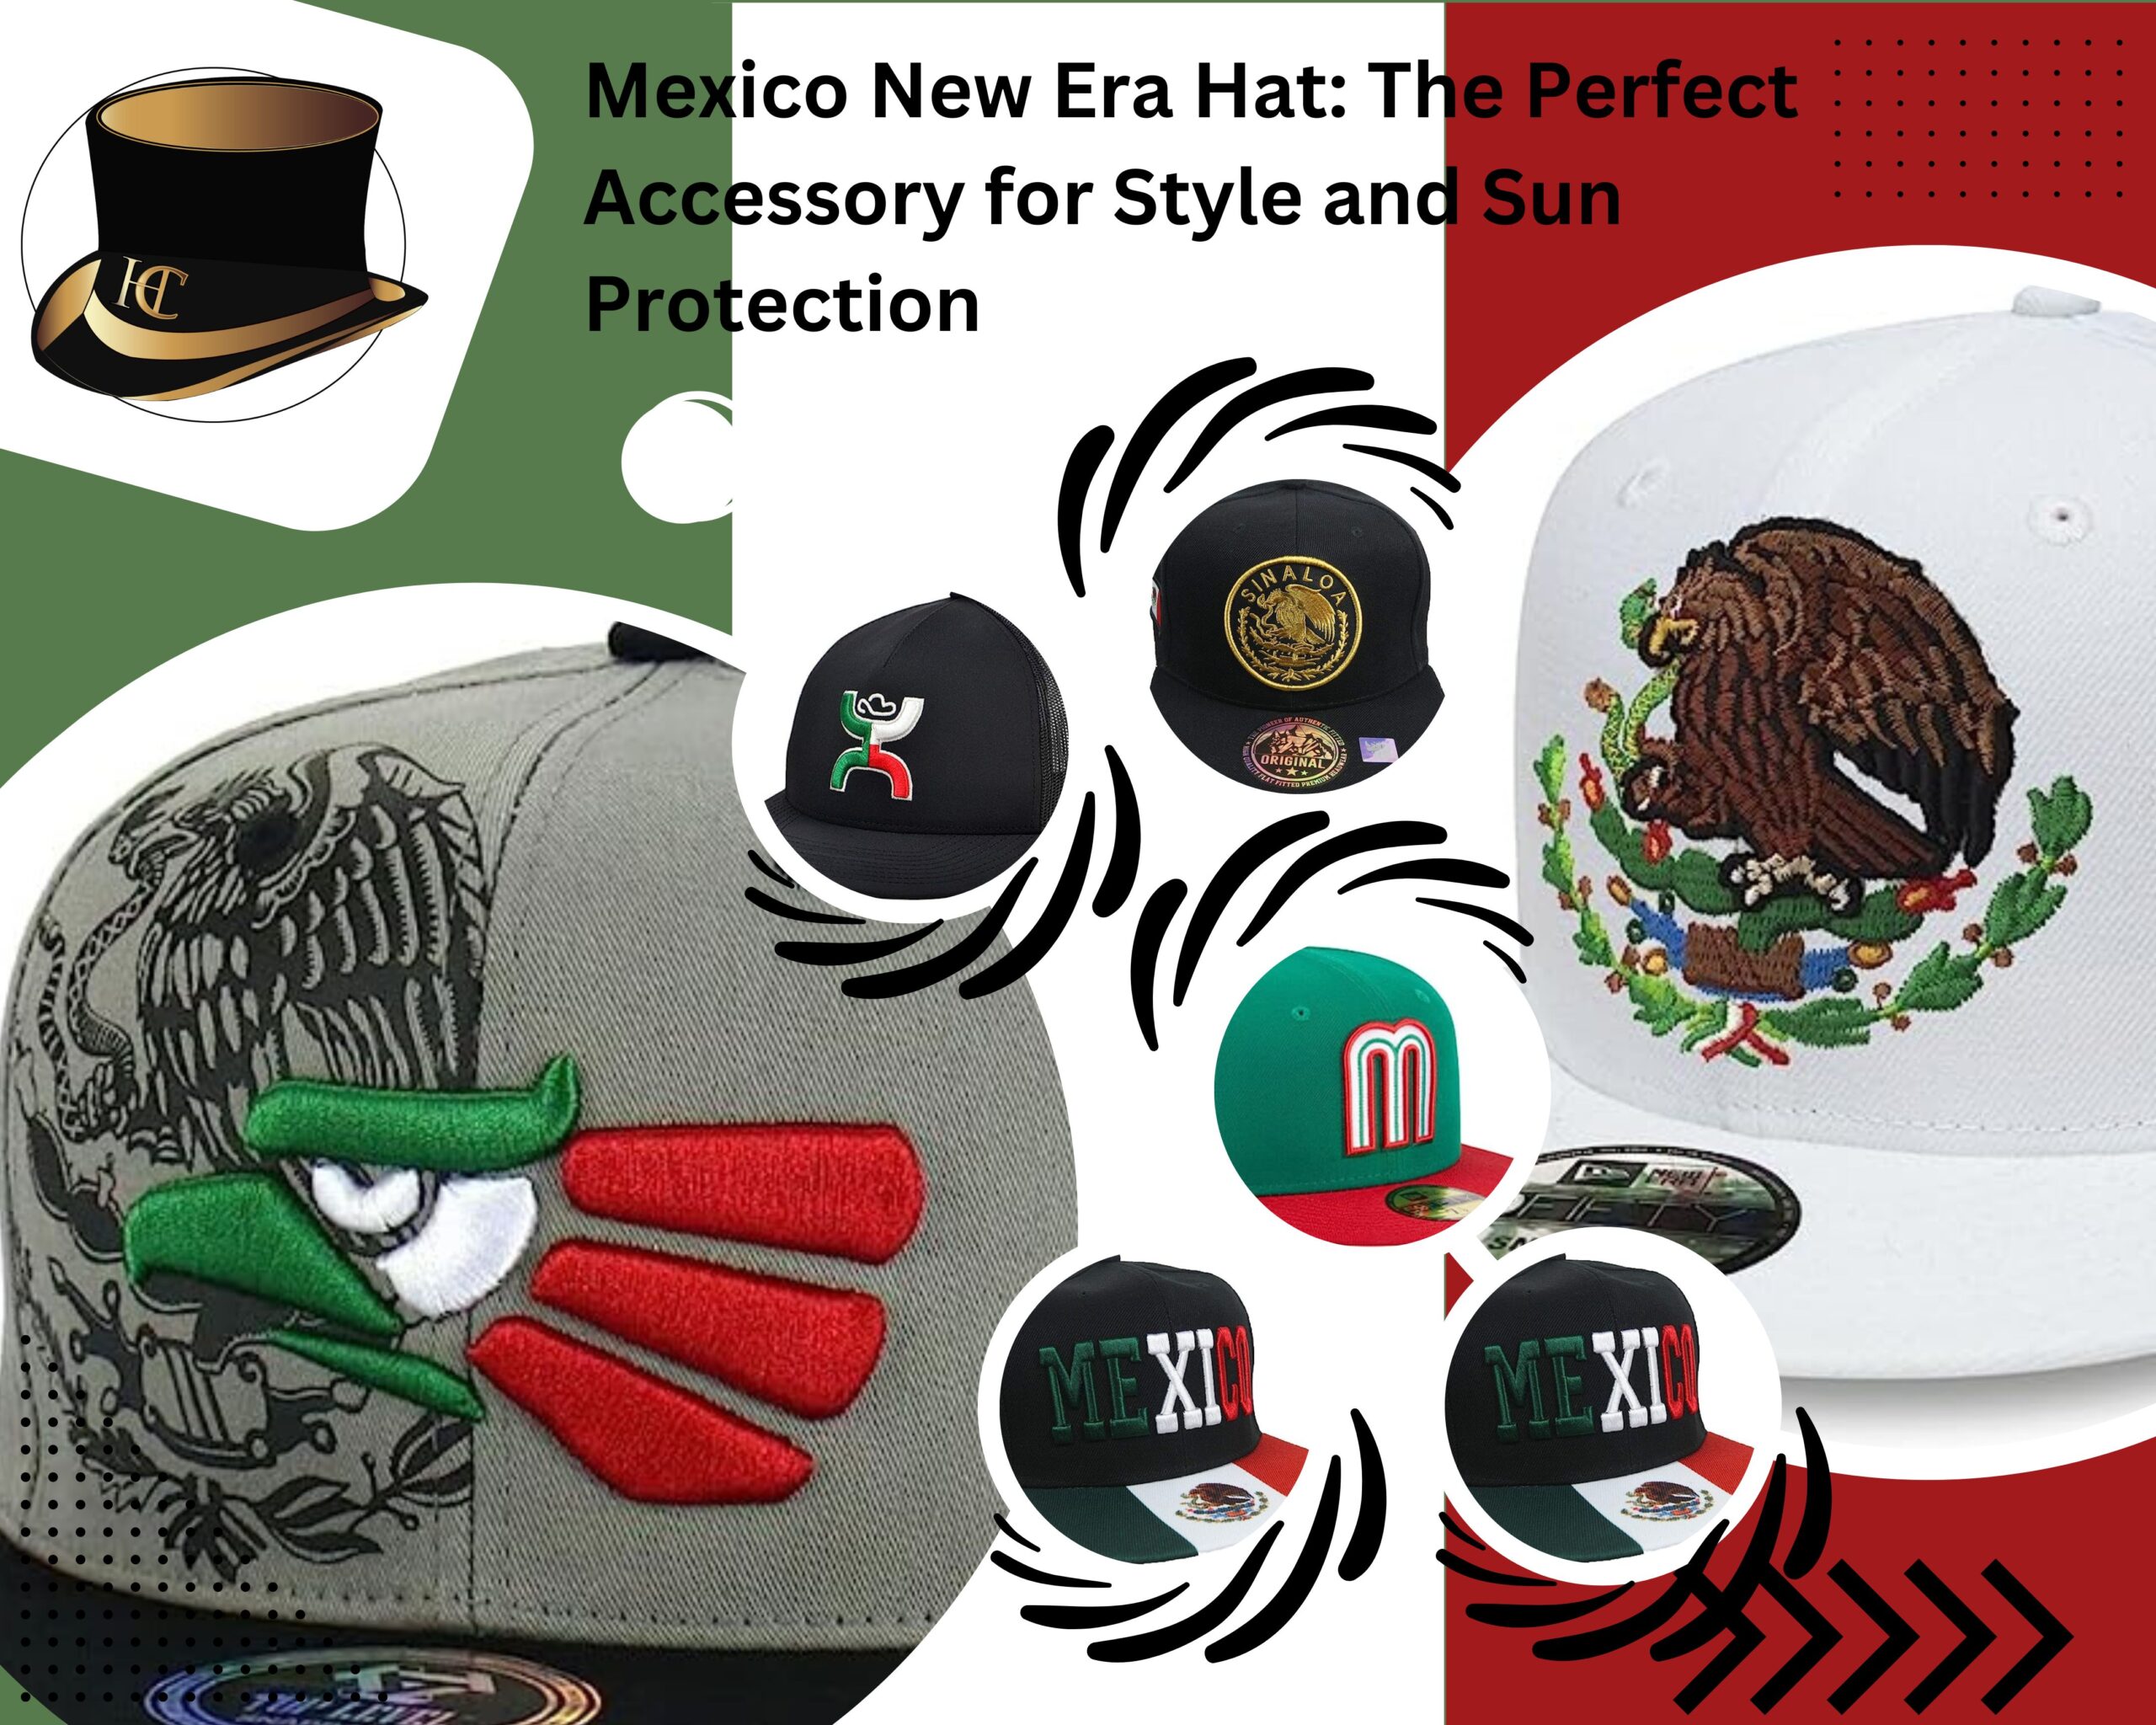 Mexico New Era Hat